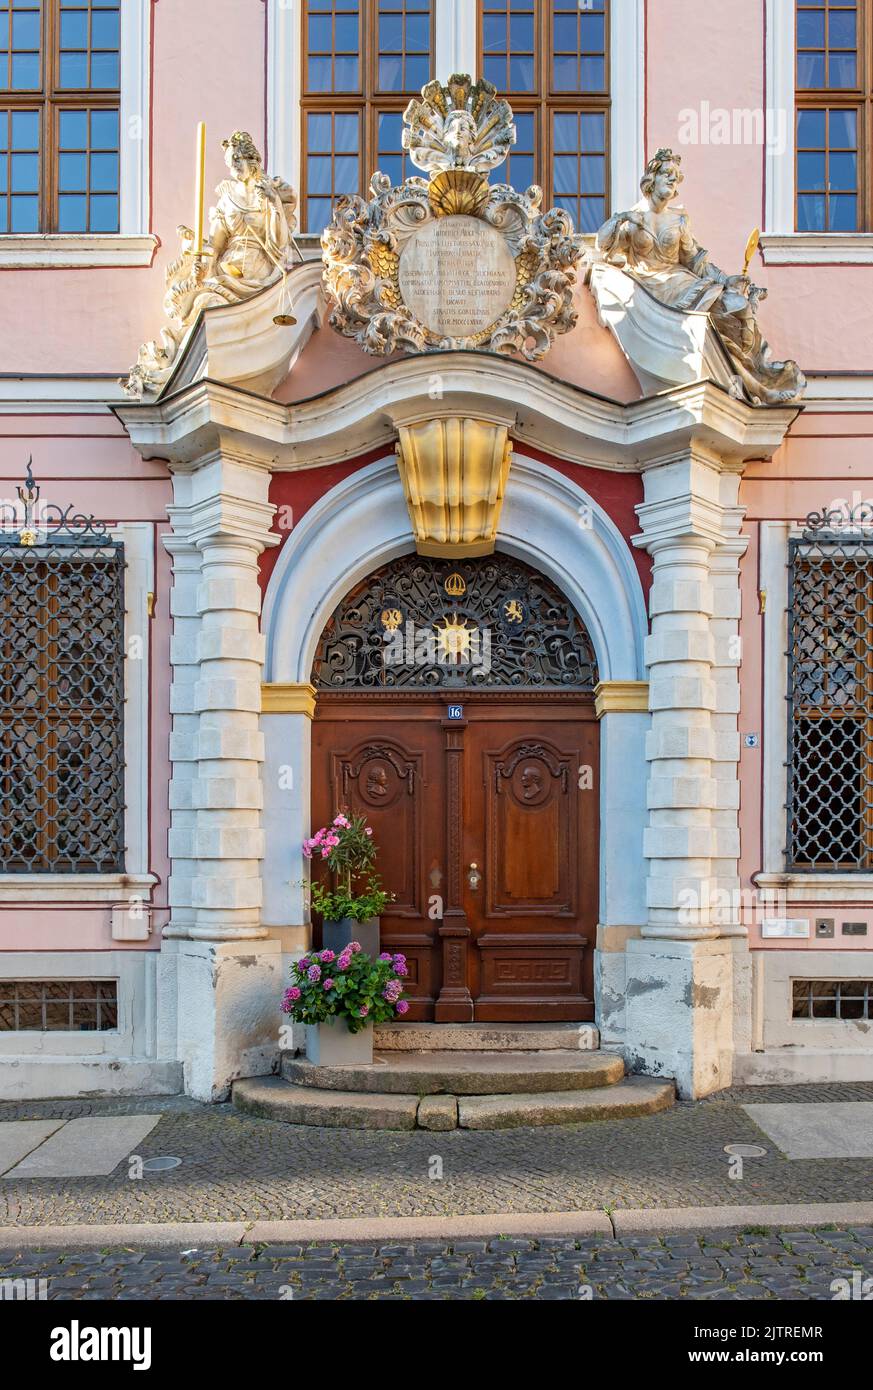 Portail de Hotel Börse, Untermarkt, Görlitz, Allemagne Banque D'Images